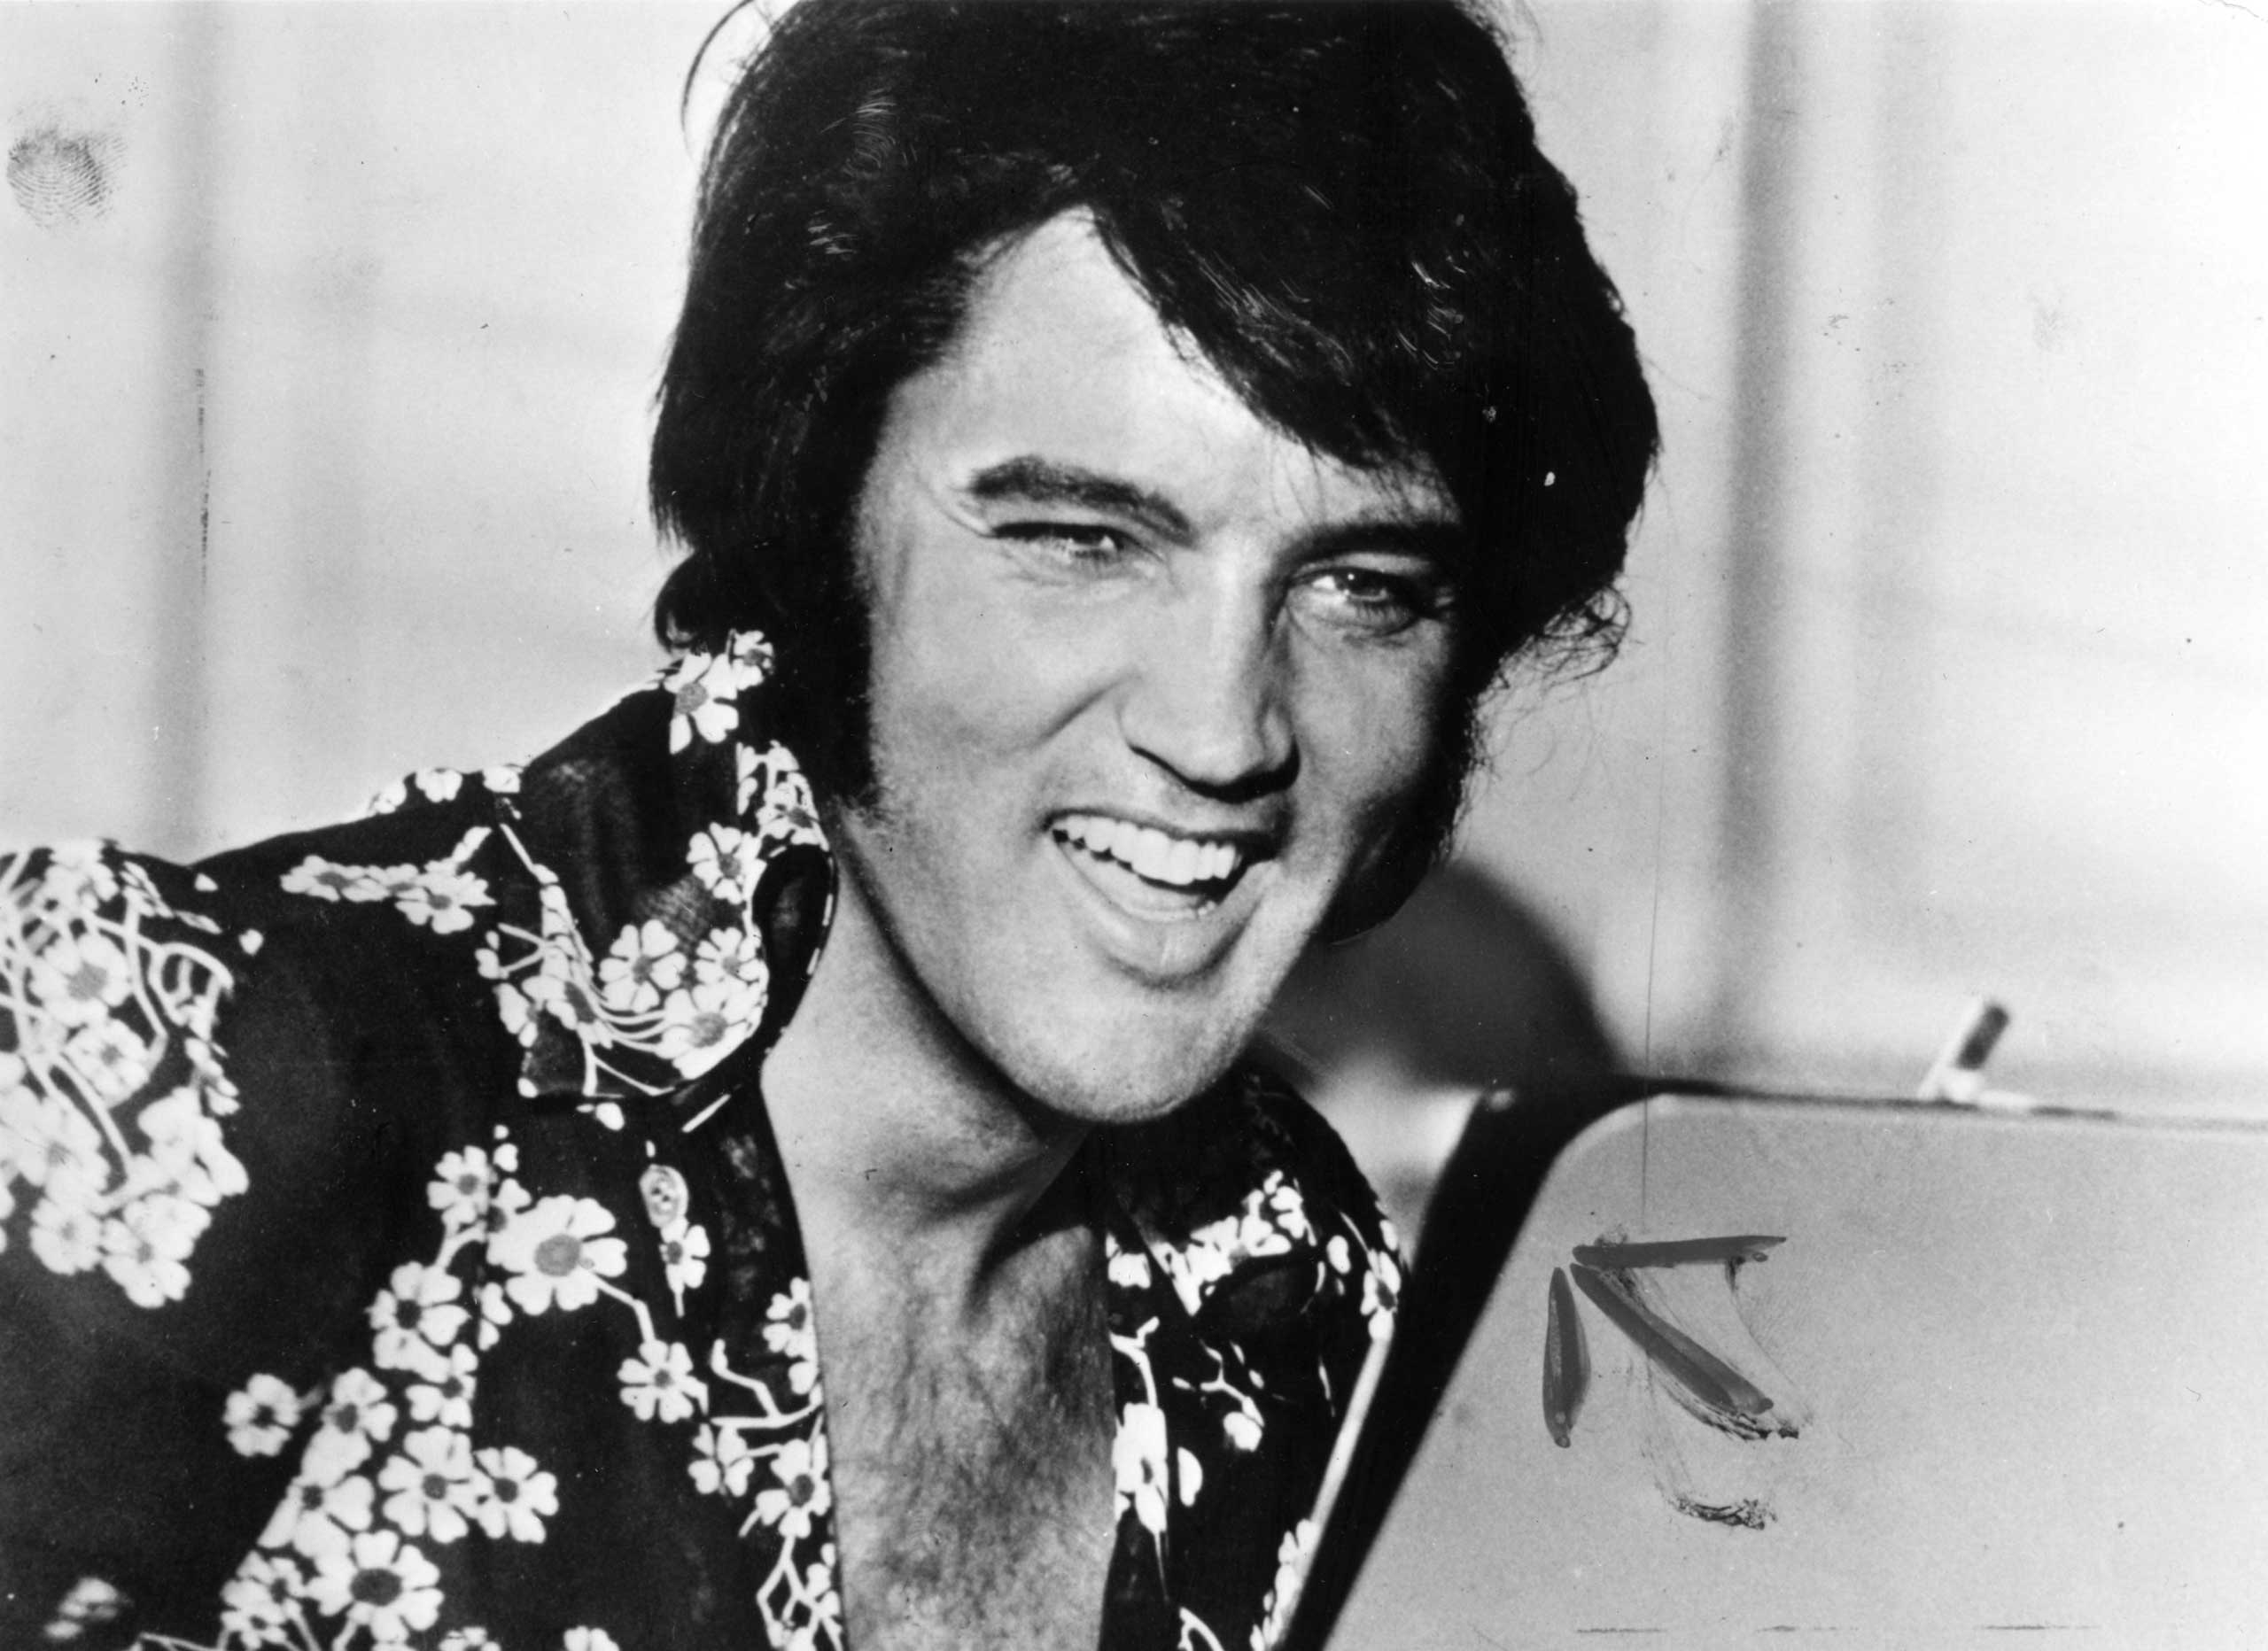 Elvis Presley around 1975. (Keystone/Getty Images)